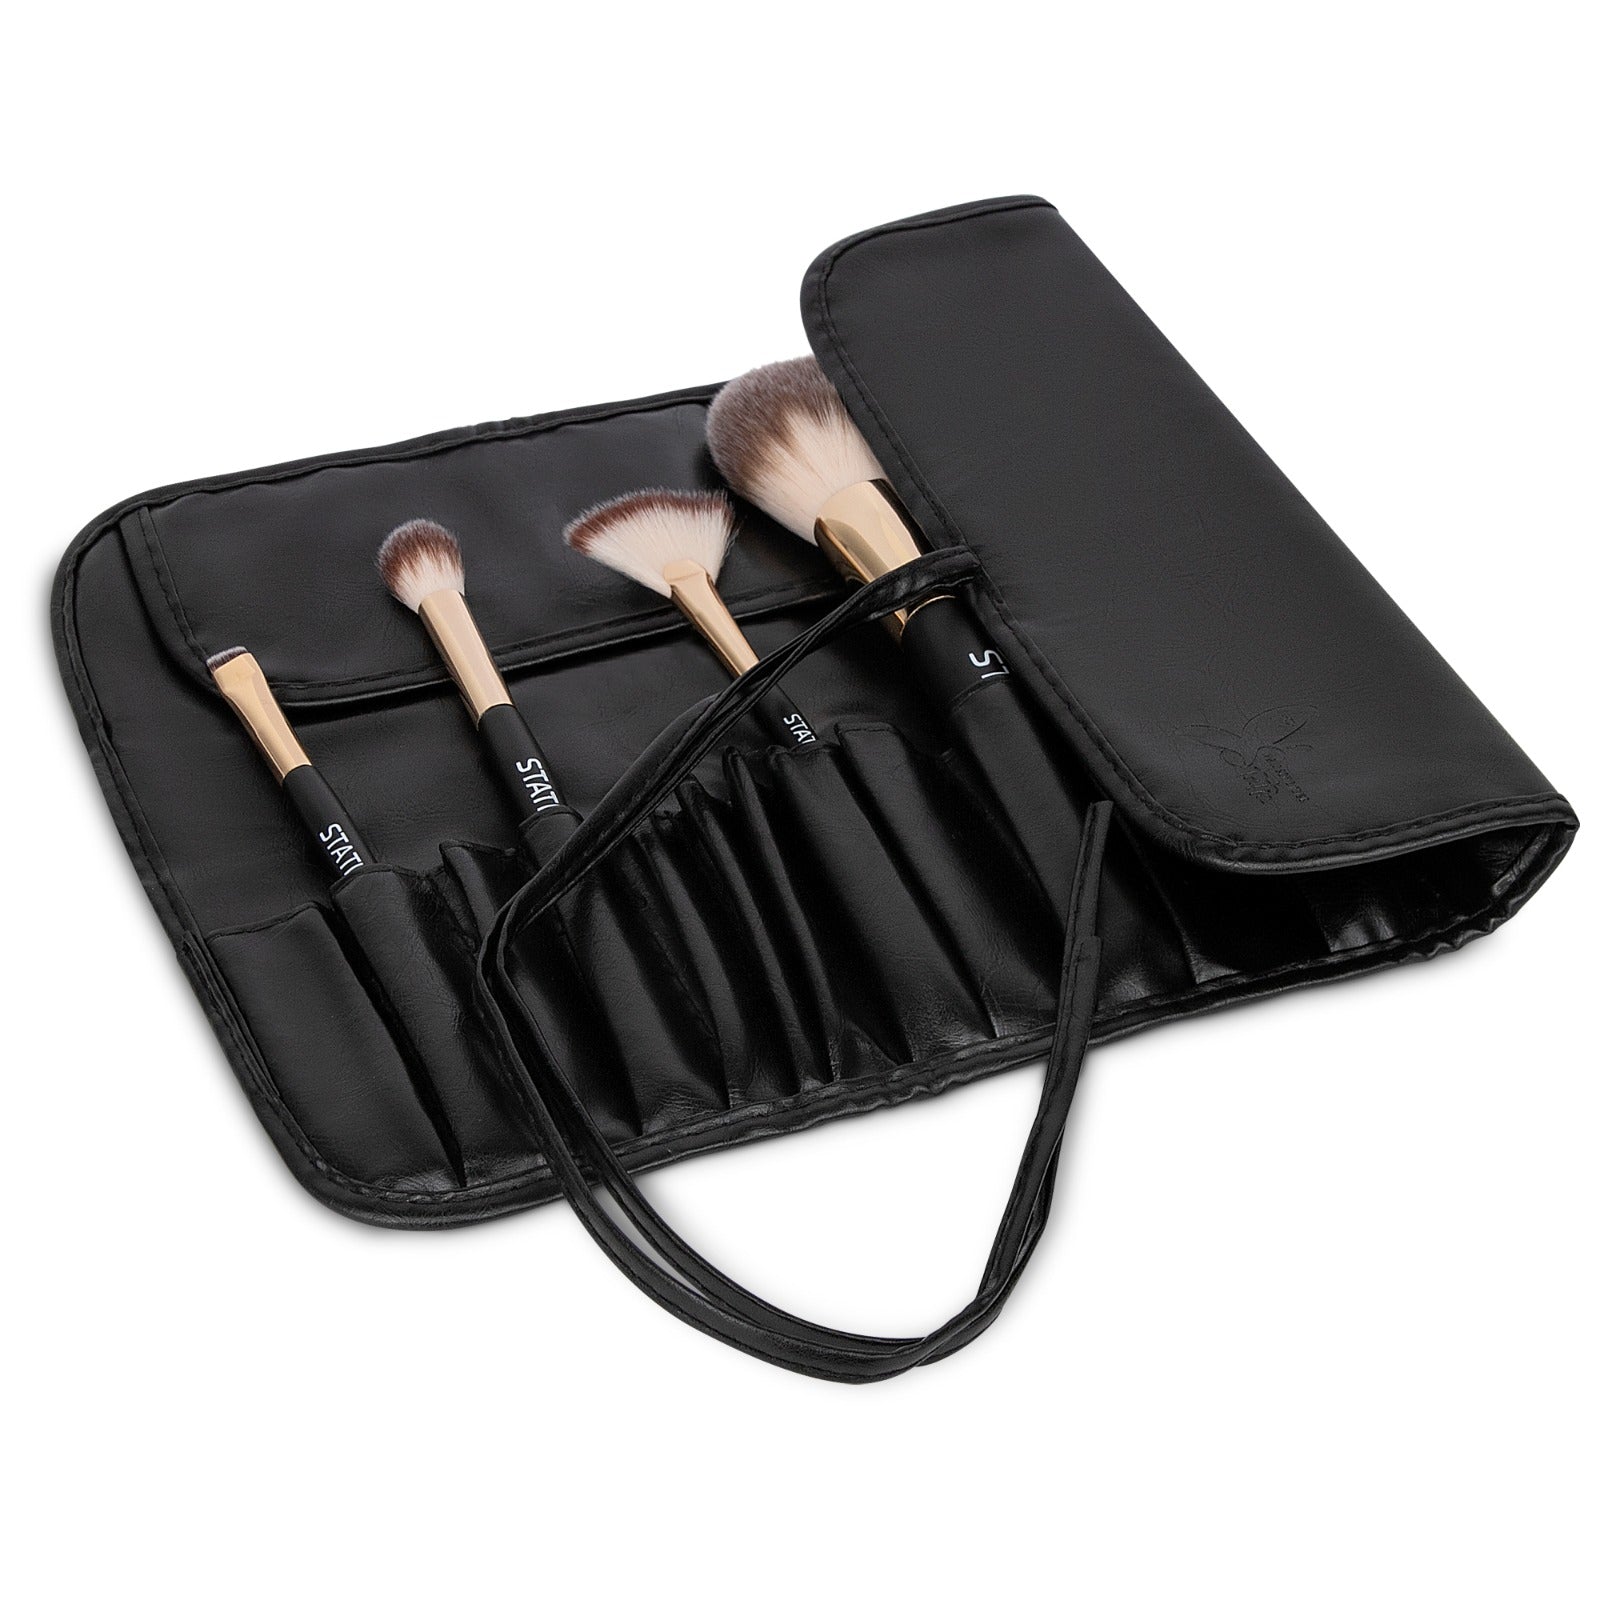 Leather Makeup Brush Roll, Leather Makeup Brush Case, Makeup Bag